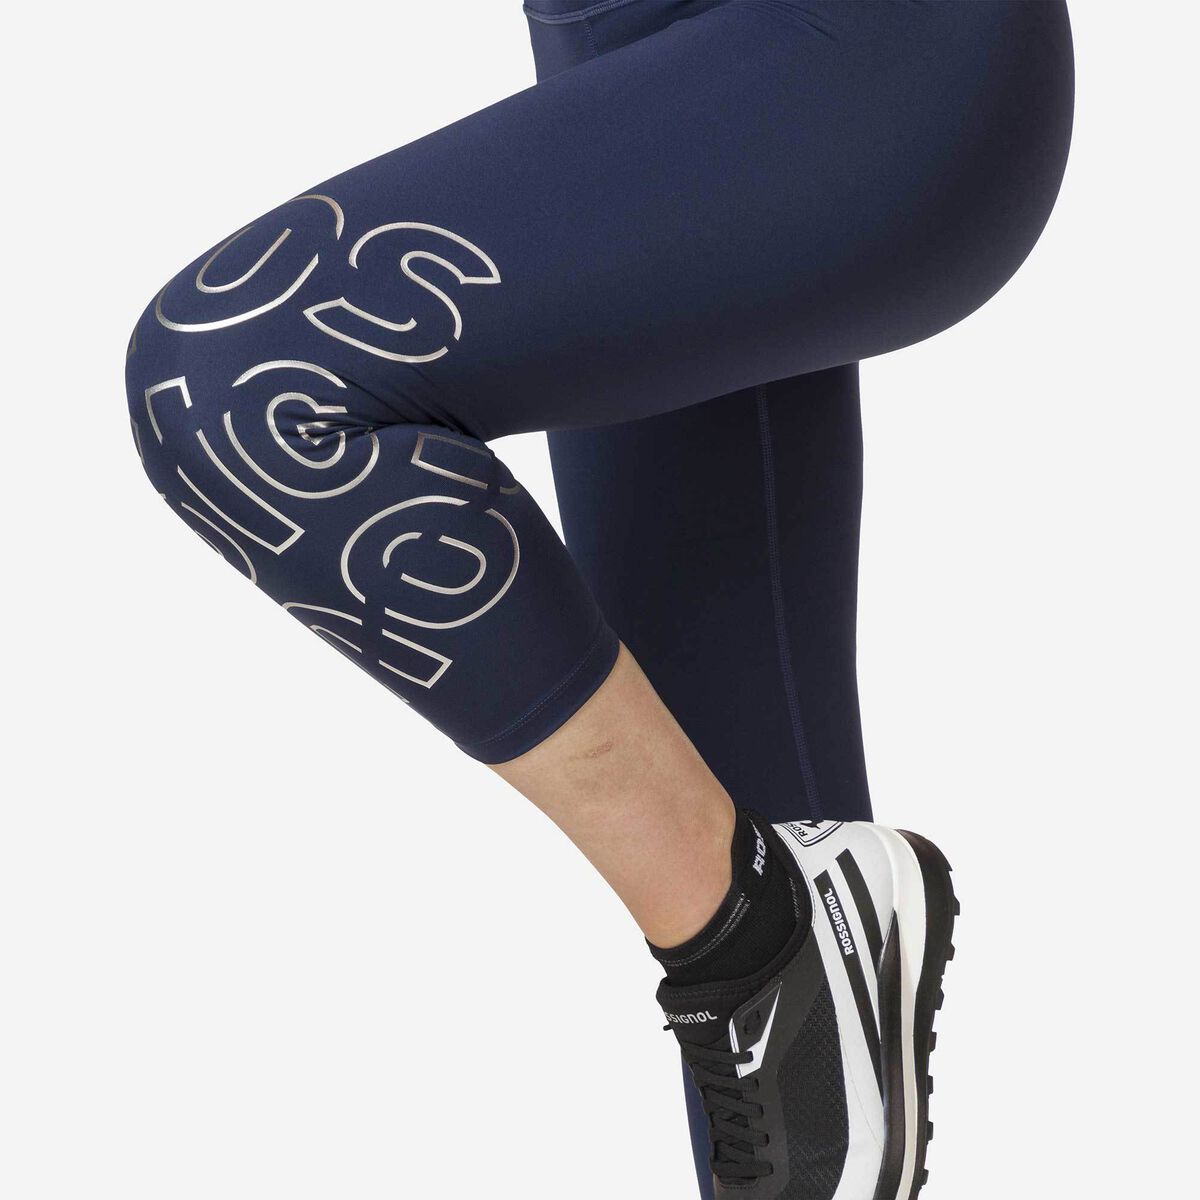 Rossignol Women's stretch 3/4 running tights, Pants Women